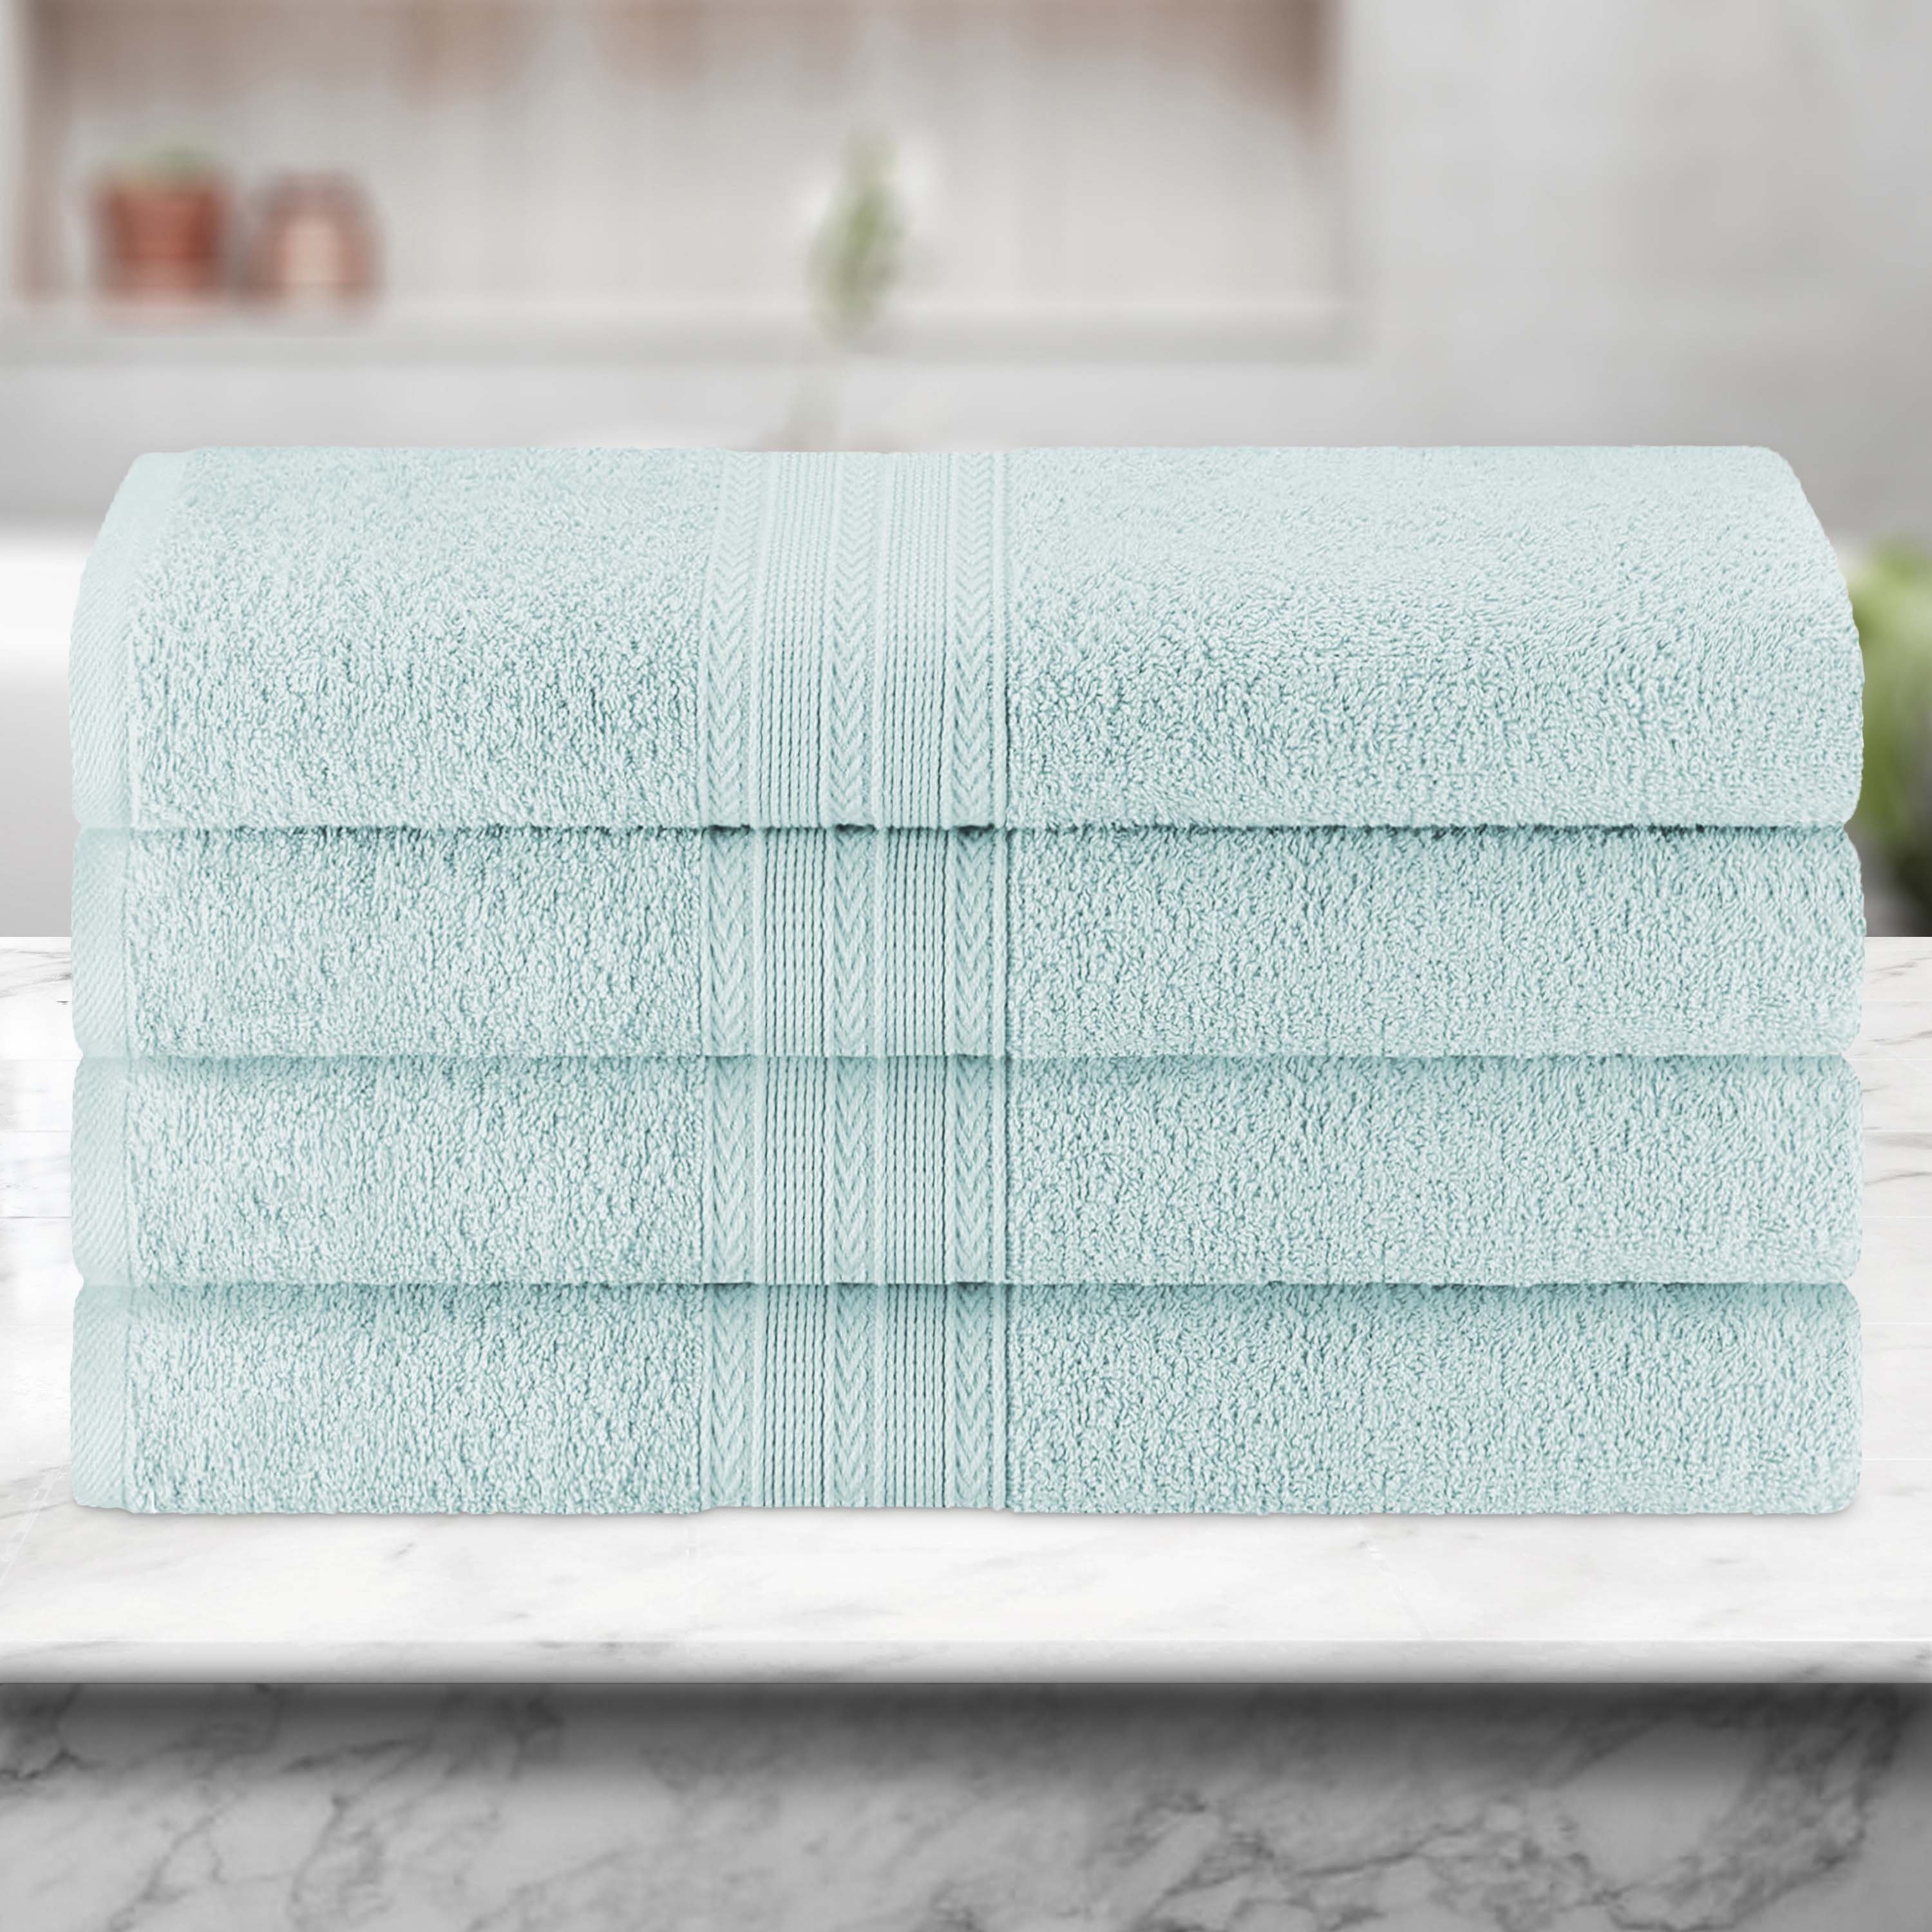 https://ak1.ostkcdn.com/images/products/is/images/direct/fcbbb6b5488507587ea686c71d245ec68e0967ce/Eco-Friendly-Sustainable-Cotton-Bath-Towel-Set-of-4-by-Superior.jpg